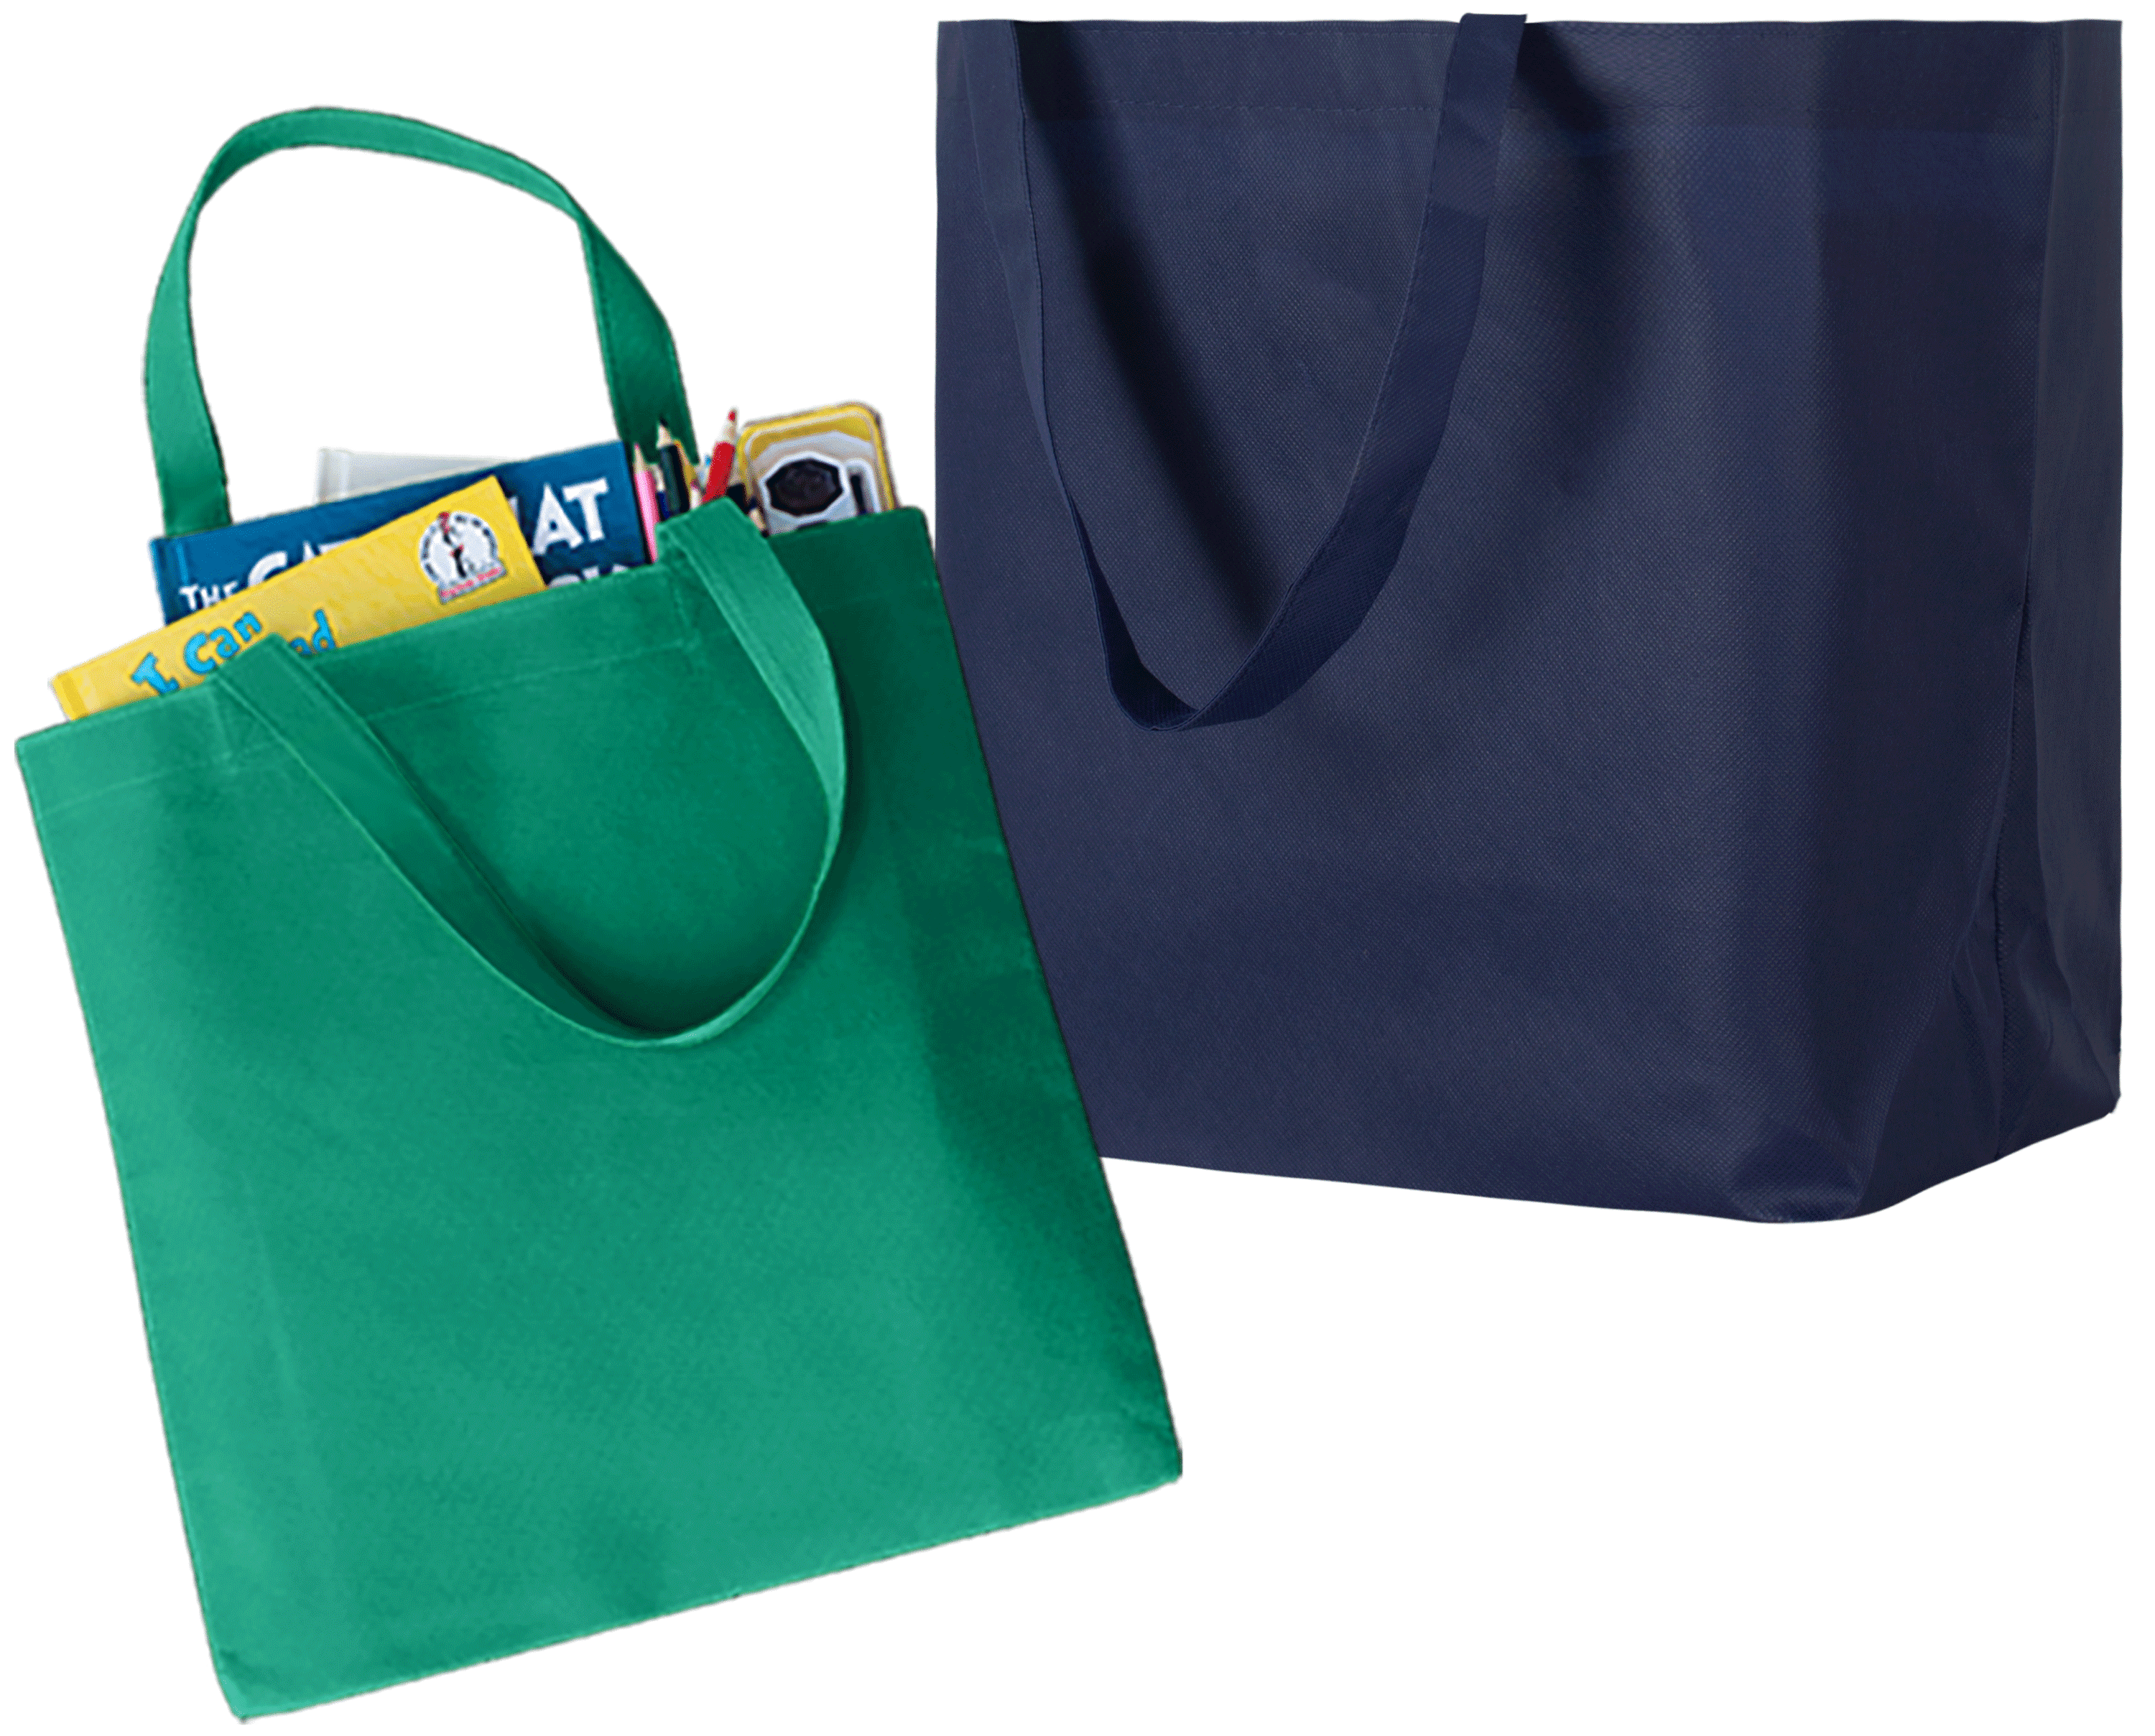 Cheap Wholesale Shopper Non Woven Tote Bag 16 x 12 In Bulk